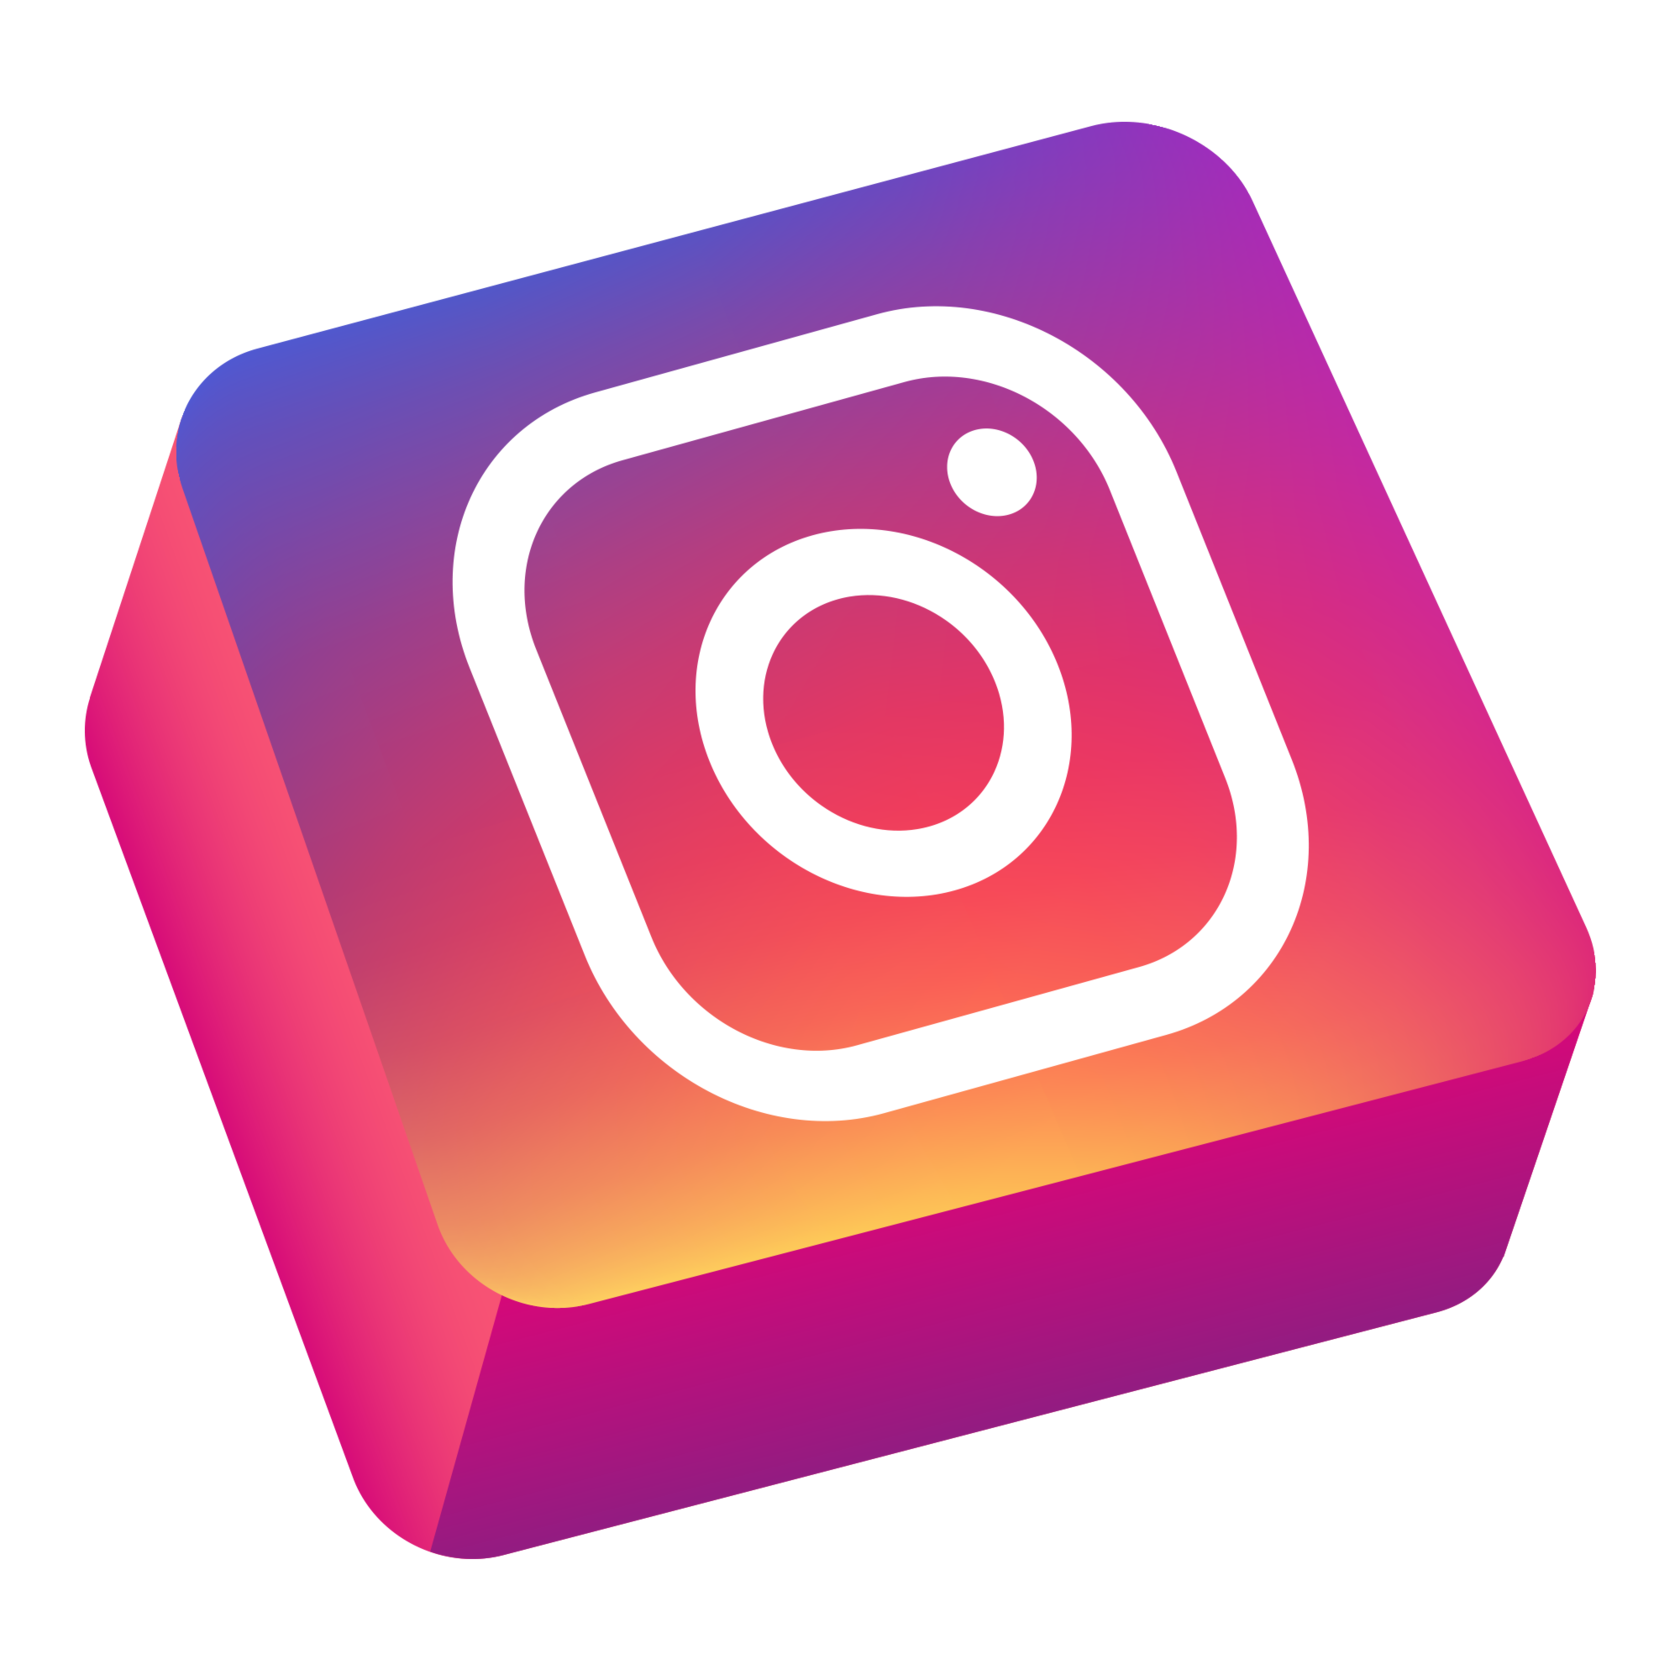 Xokalap insta. 3д логотип Инстаграмм. Иконка Instagram. Иконка Инстаграм 3д. Объемные иконки.